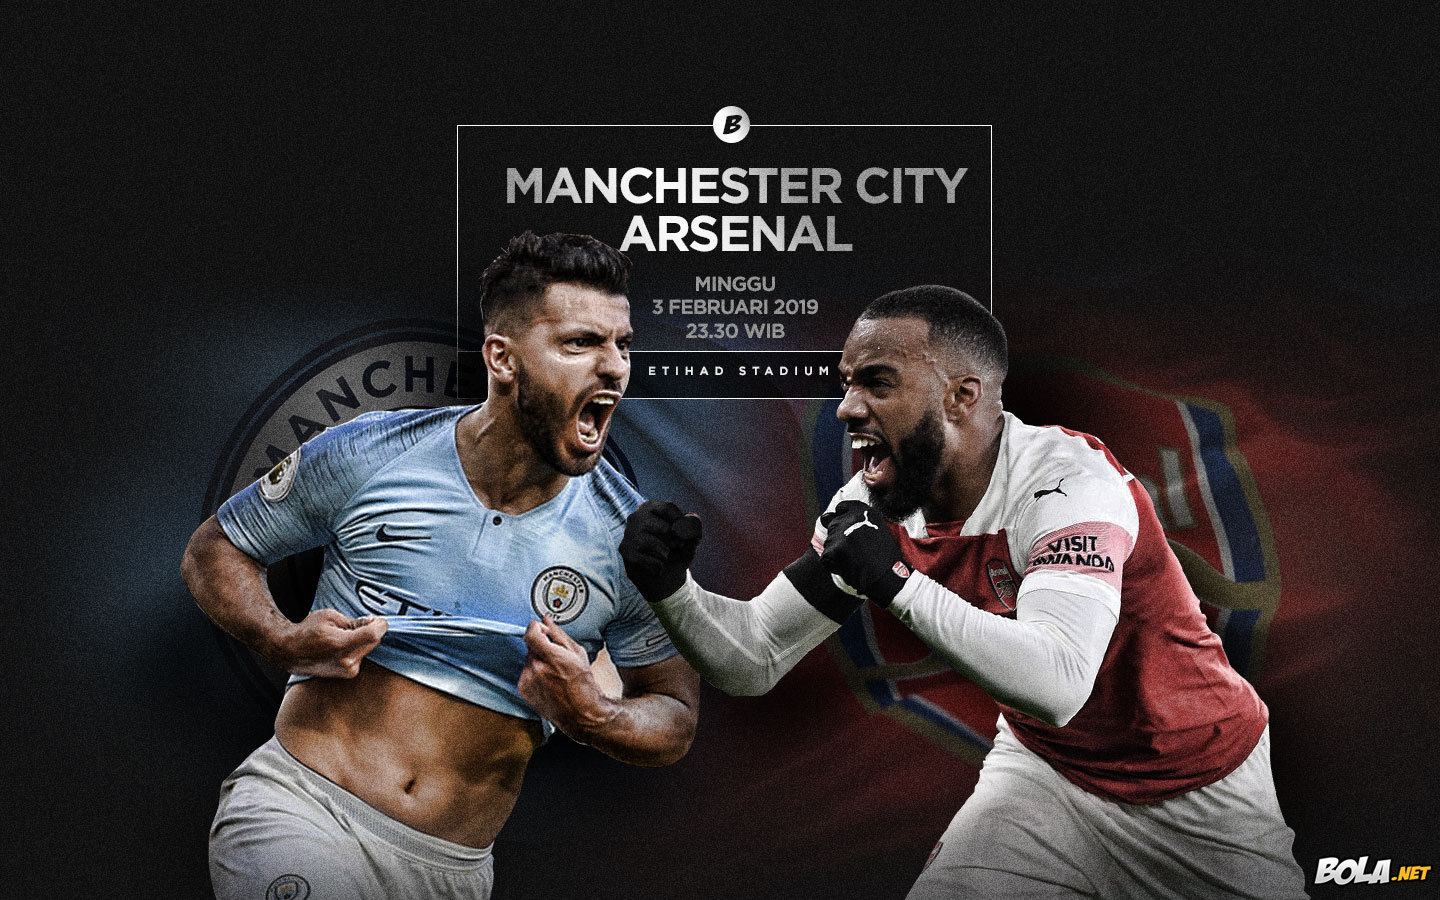 Deskripsi : Wallpaper Manchester City Vs Arsenal, size: 1440x900